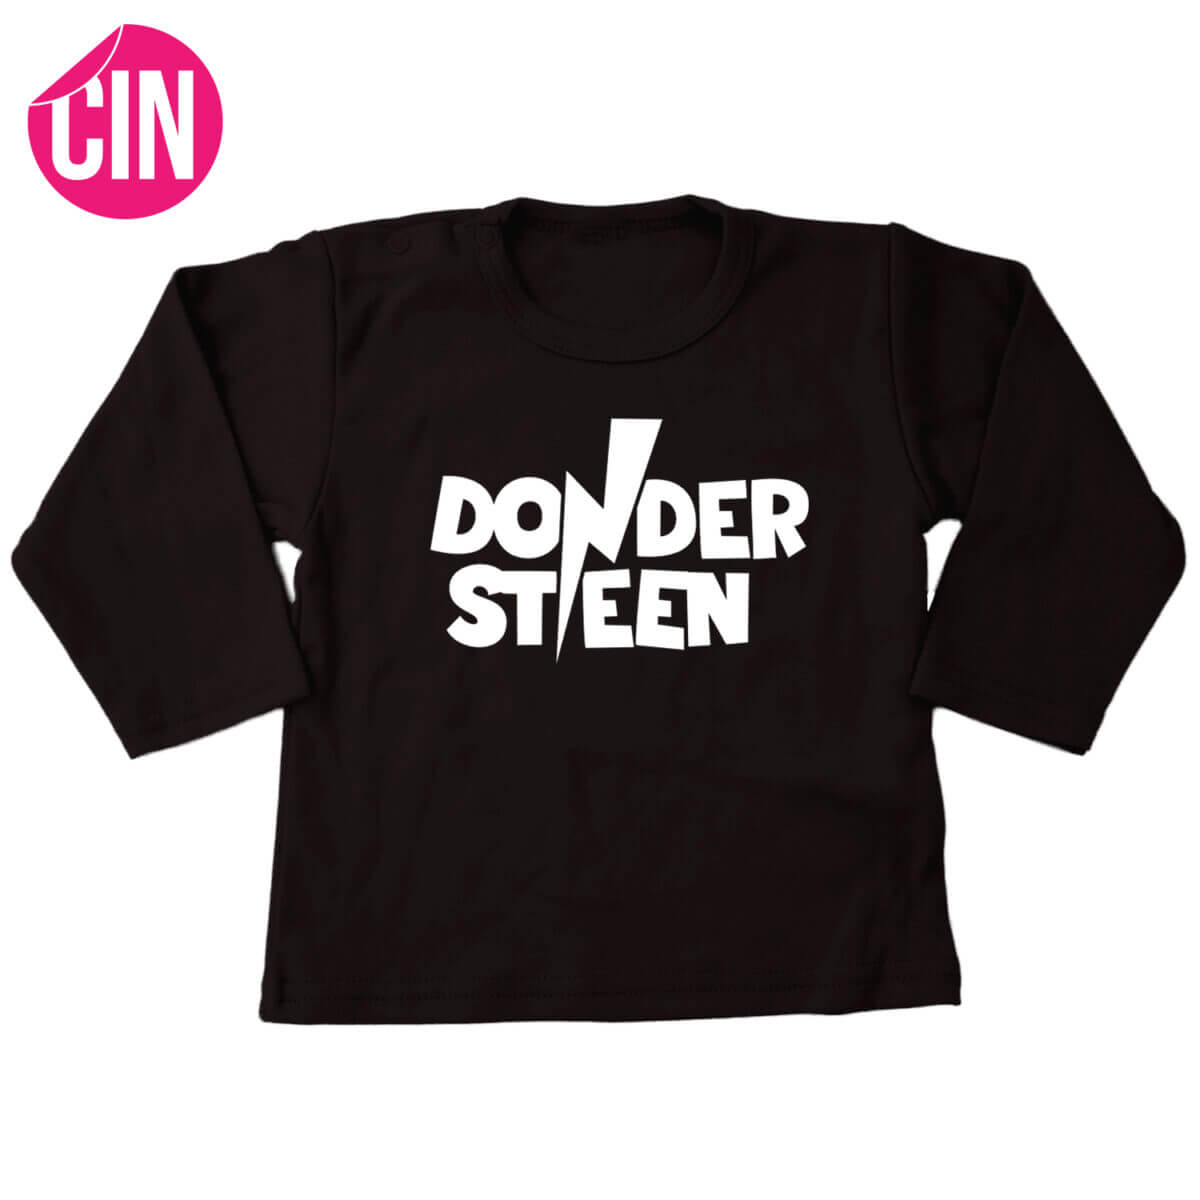 Dondersteen t-shirt cindysigns